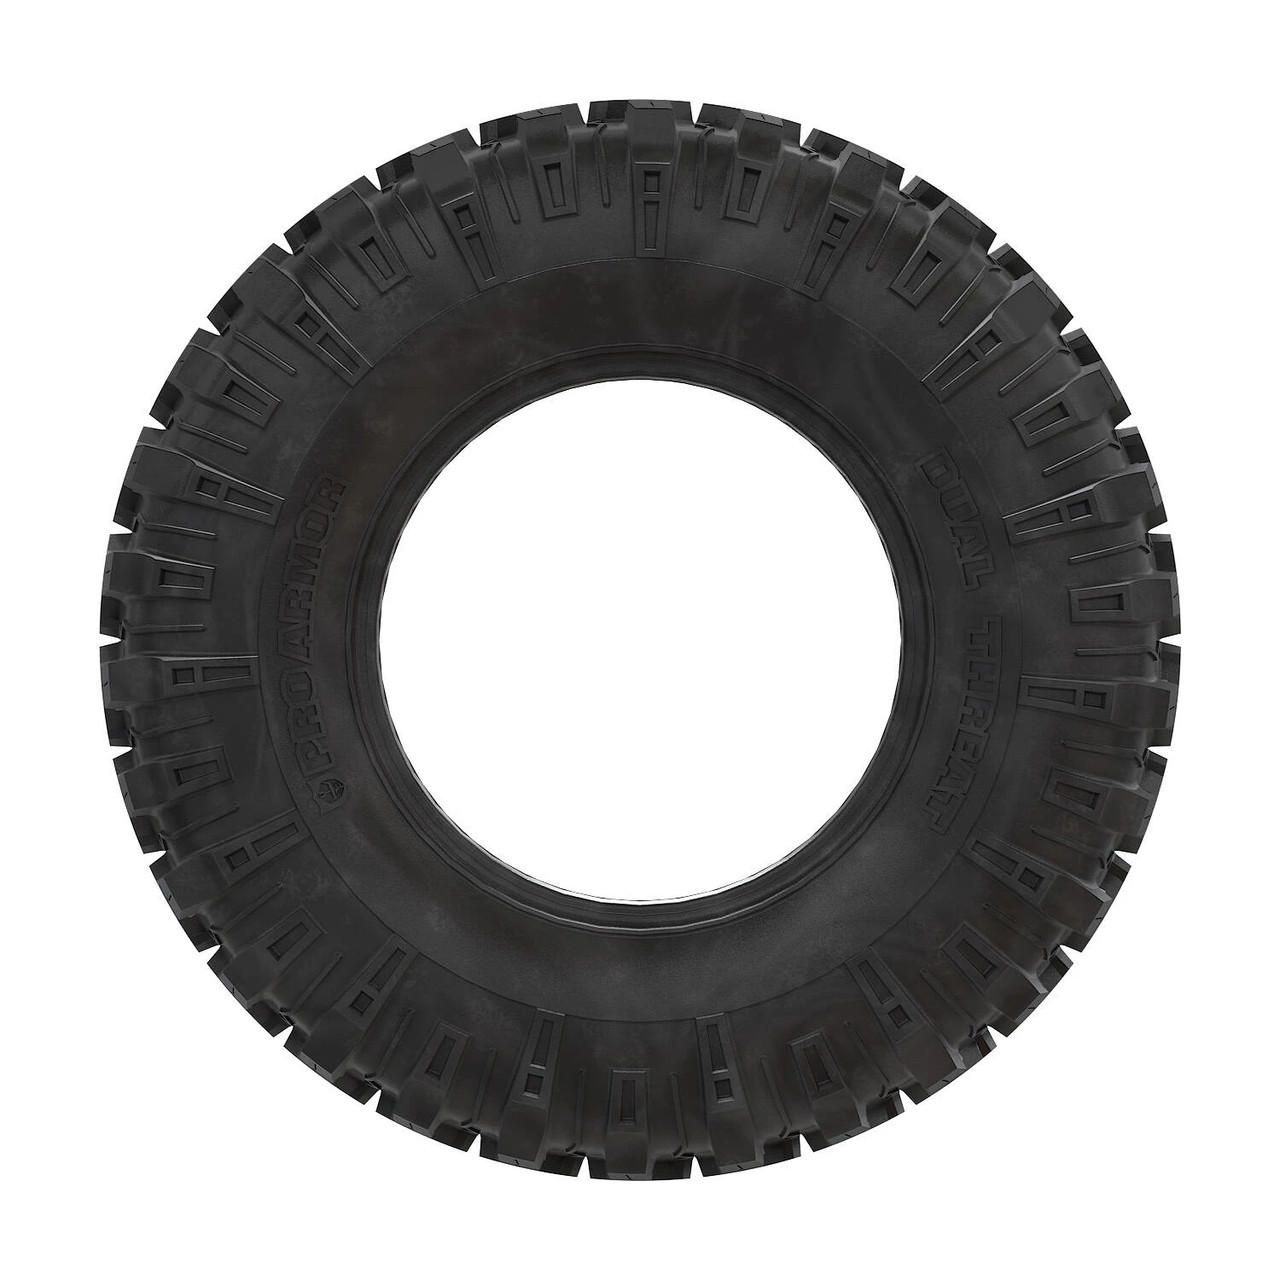 Polaris New OEM Pro Armor Wheel & Tire Set: Buckle & Dual-Threat, 29R14, 2883149